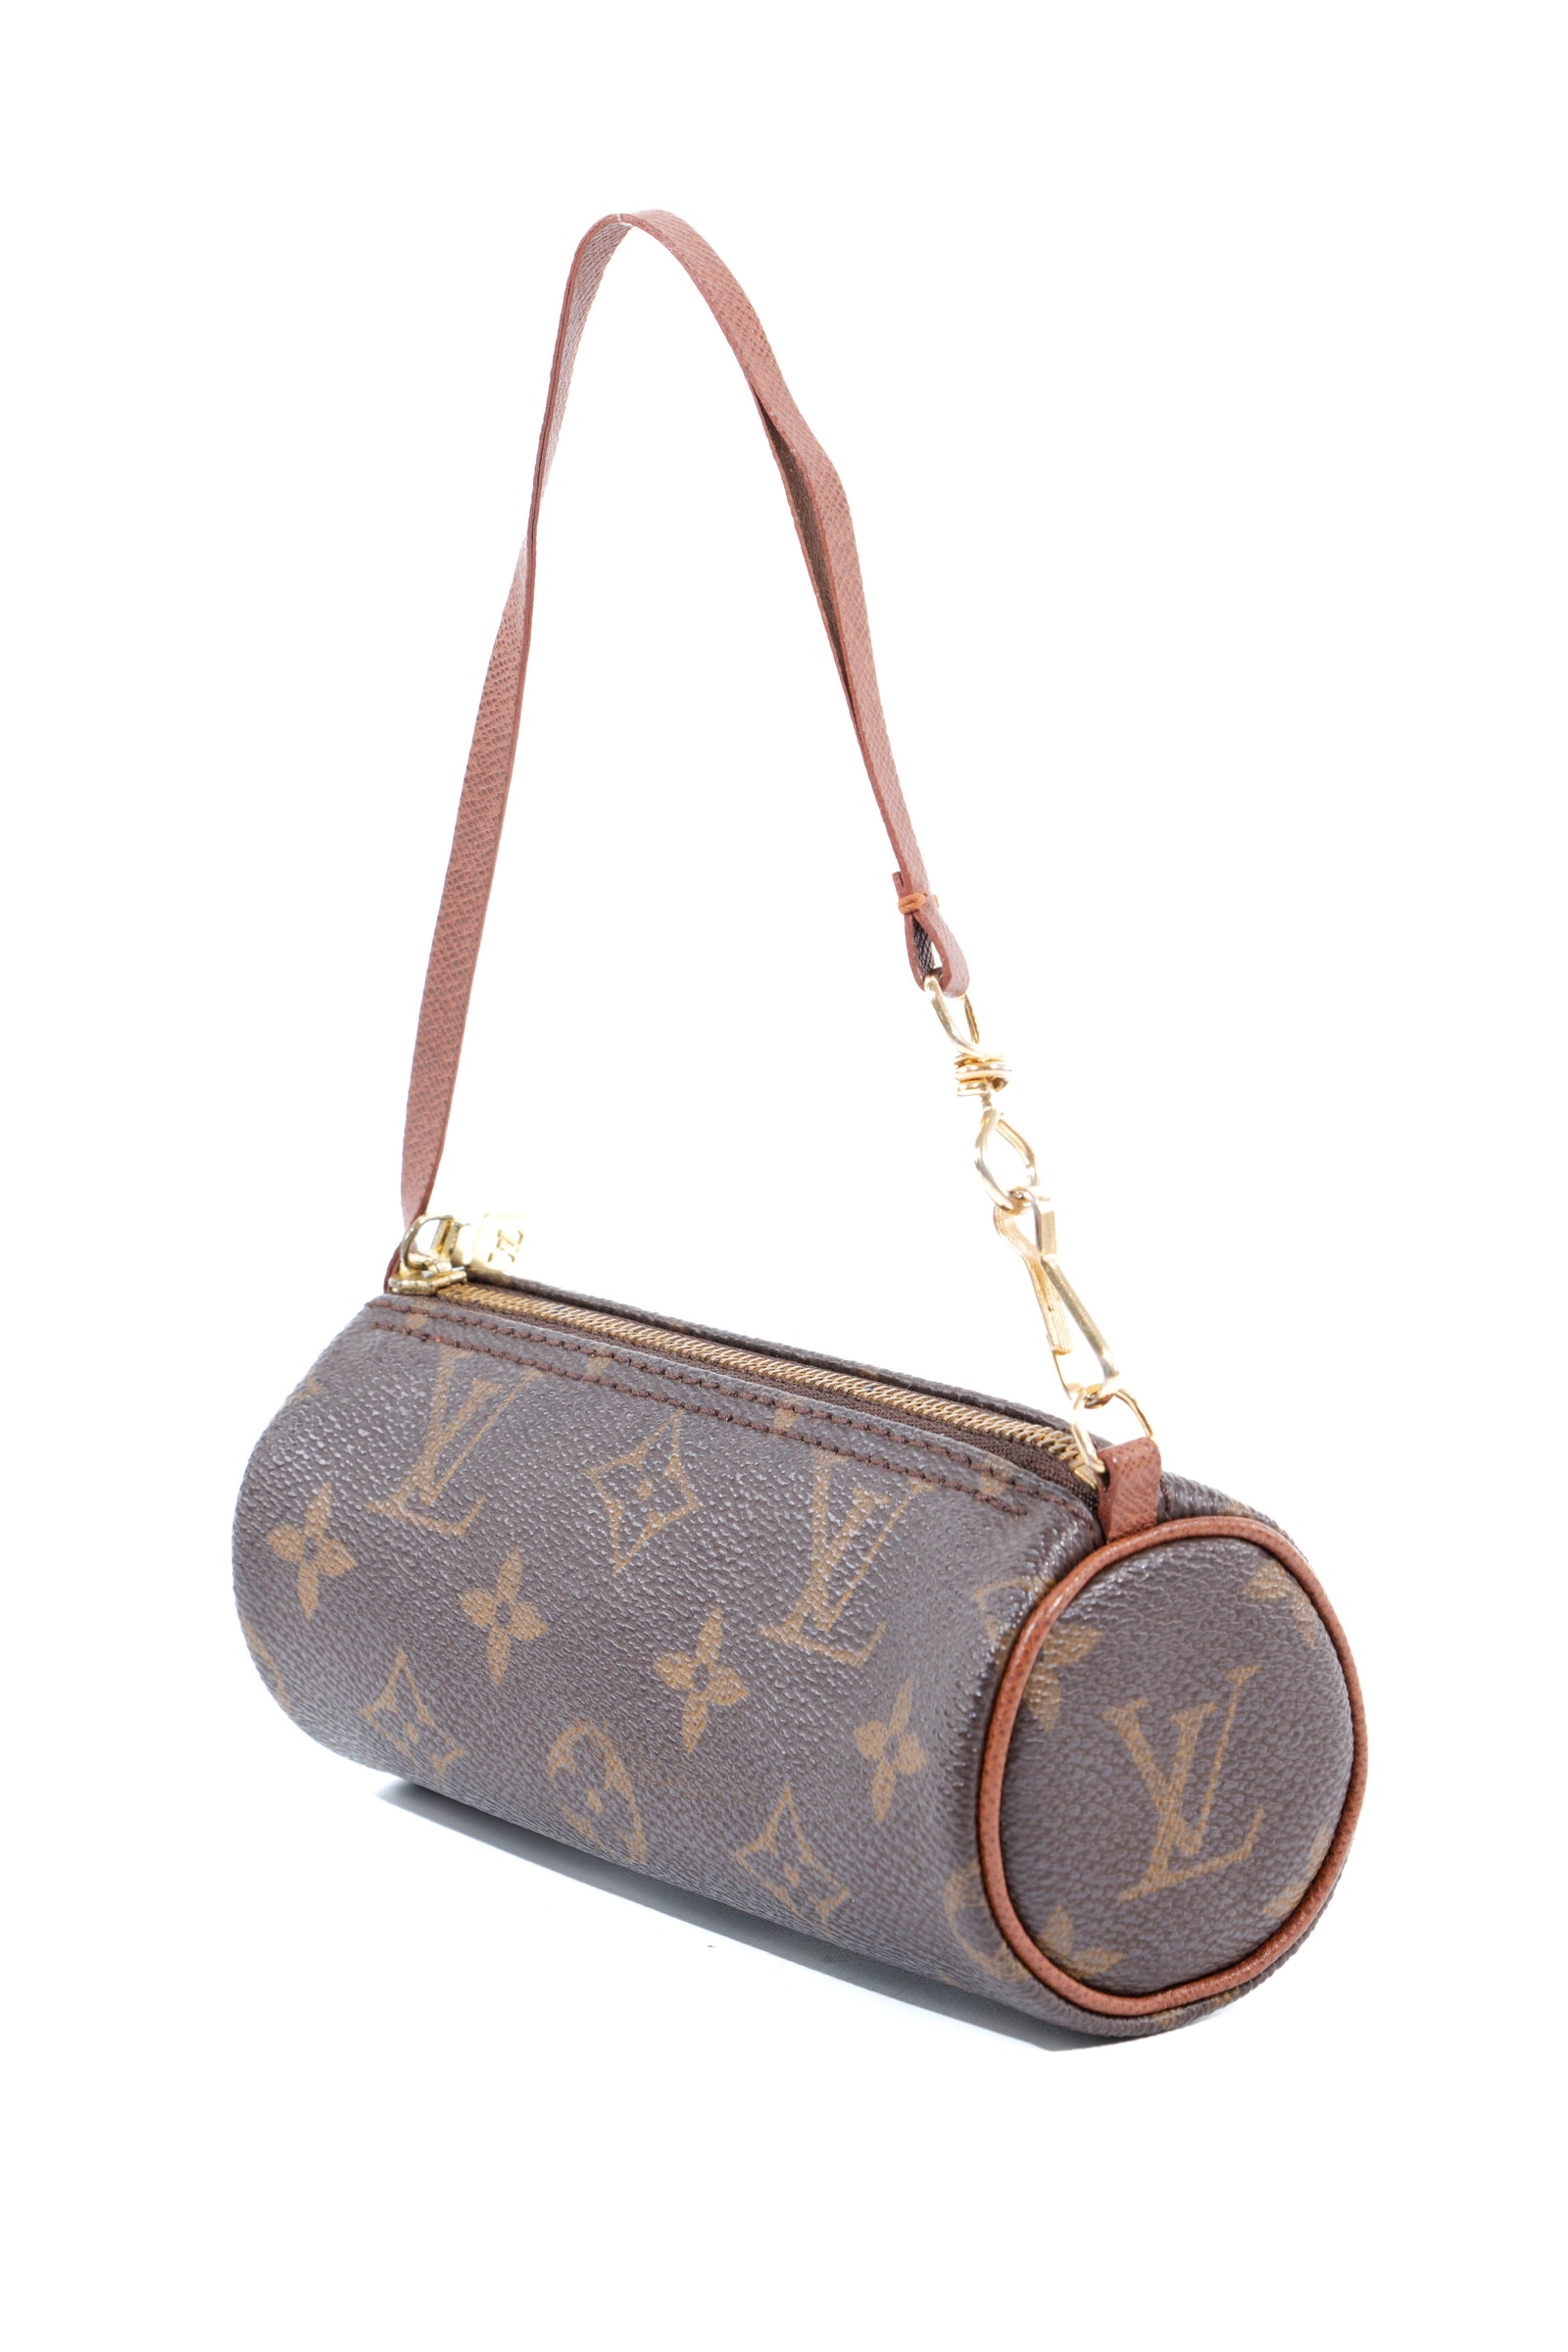 Louis Vuitton Keepall Duffle Bag in Brown and Tan Monogram Coated Canvas -  Rafael Osona Auctions Nantucket, MA